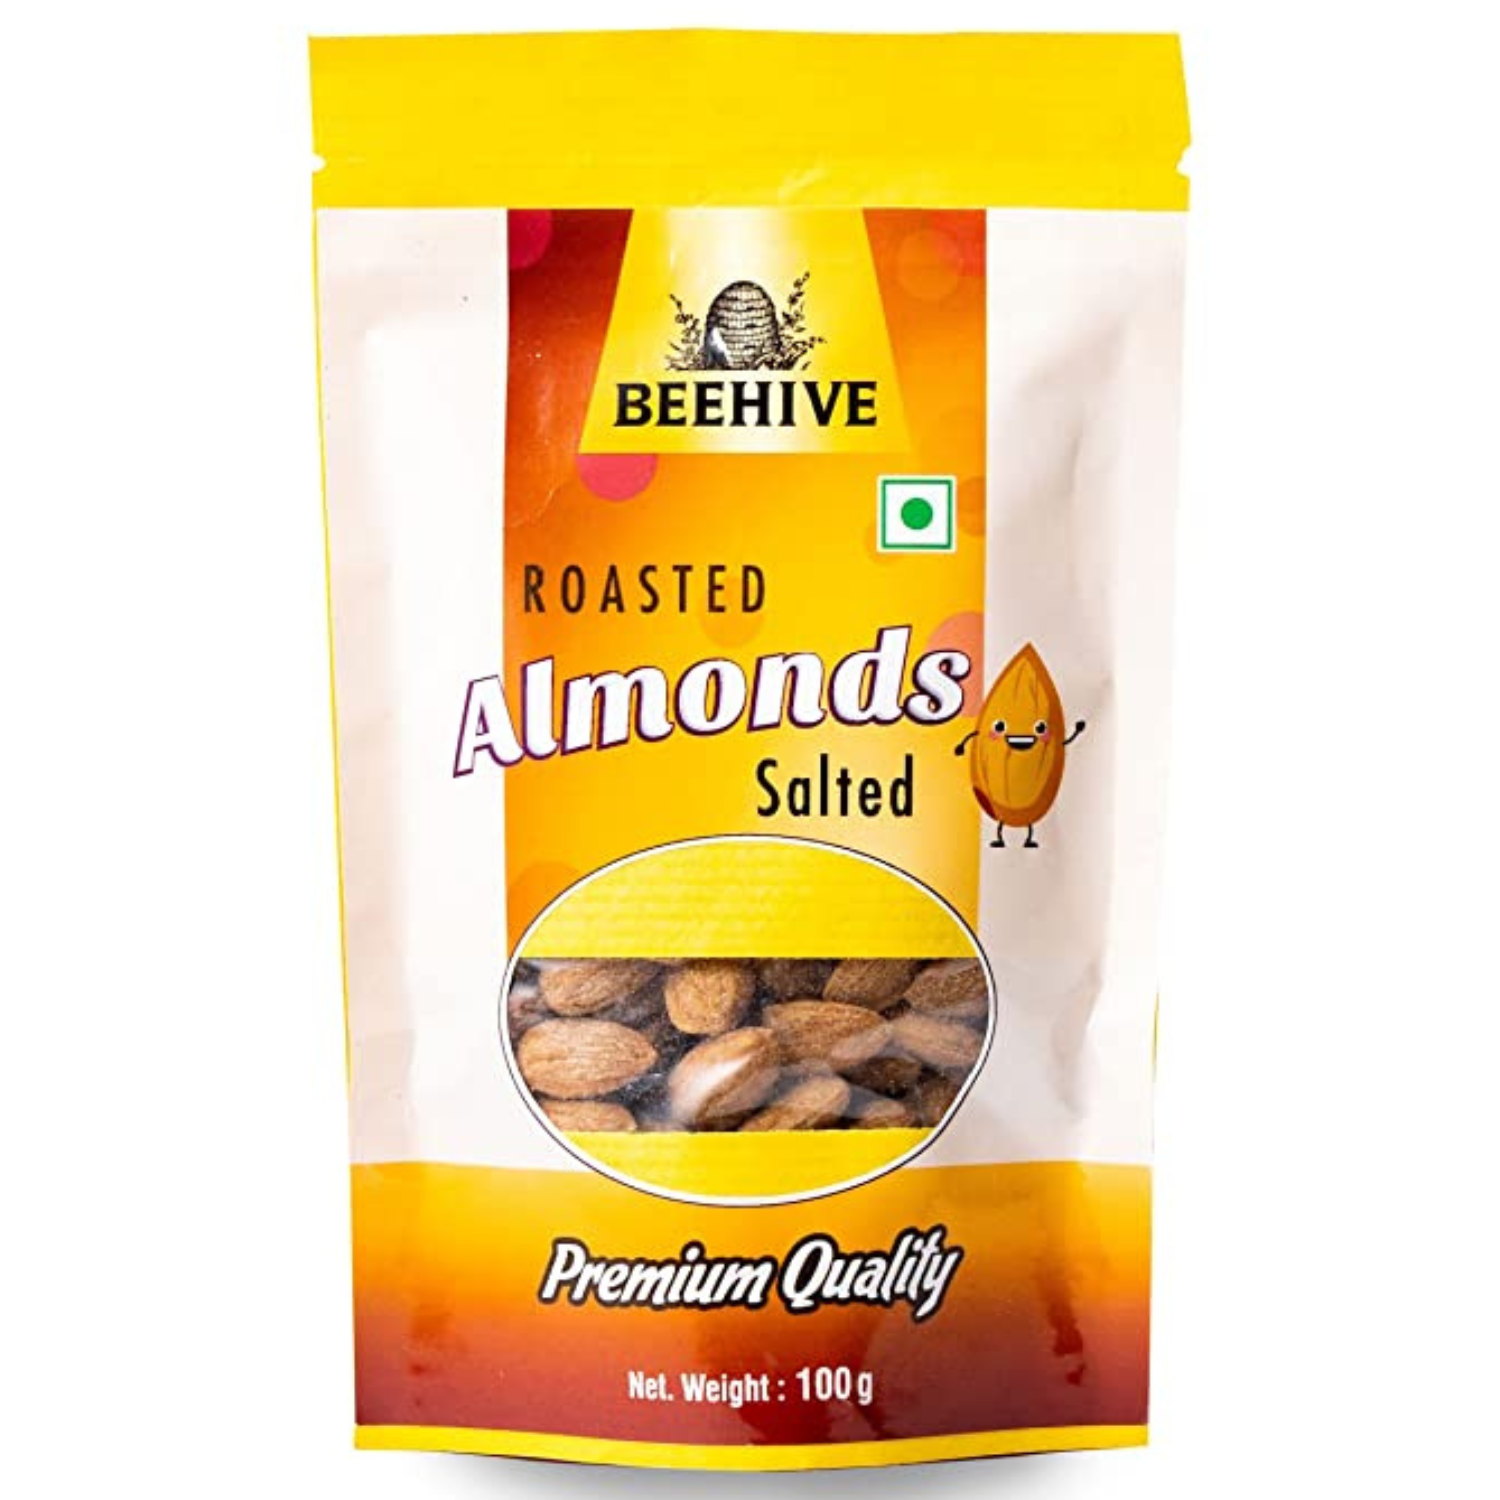 Beehive Roasted Plain Almonds